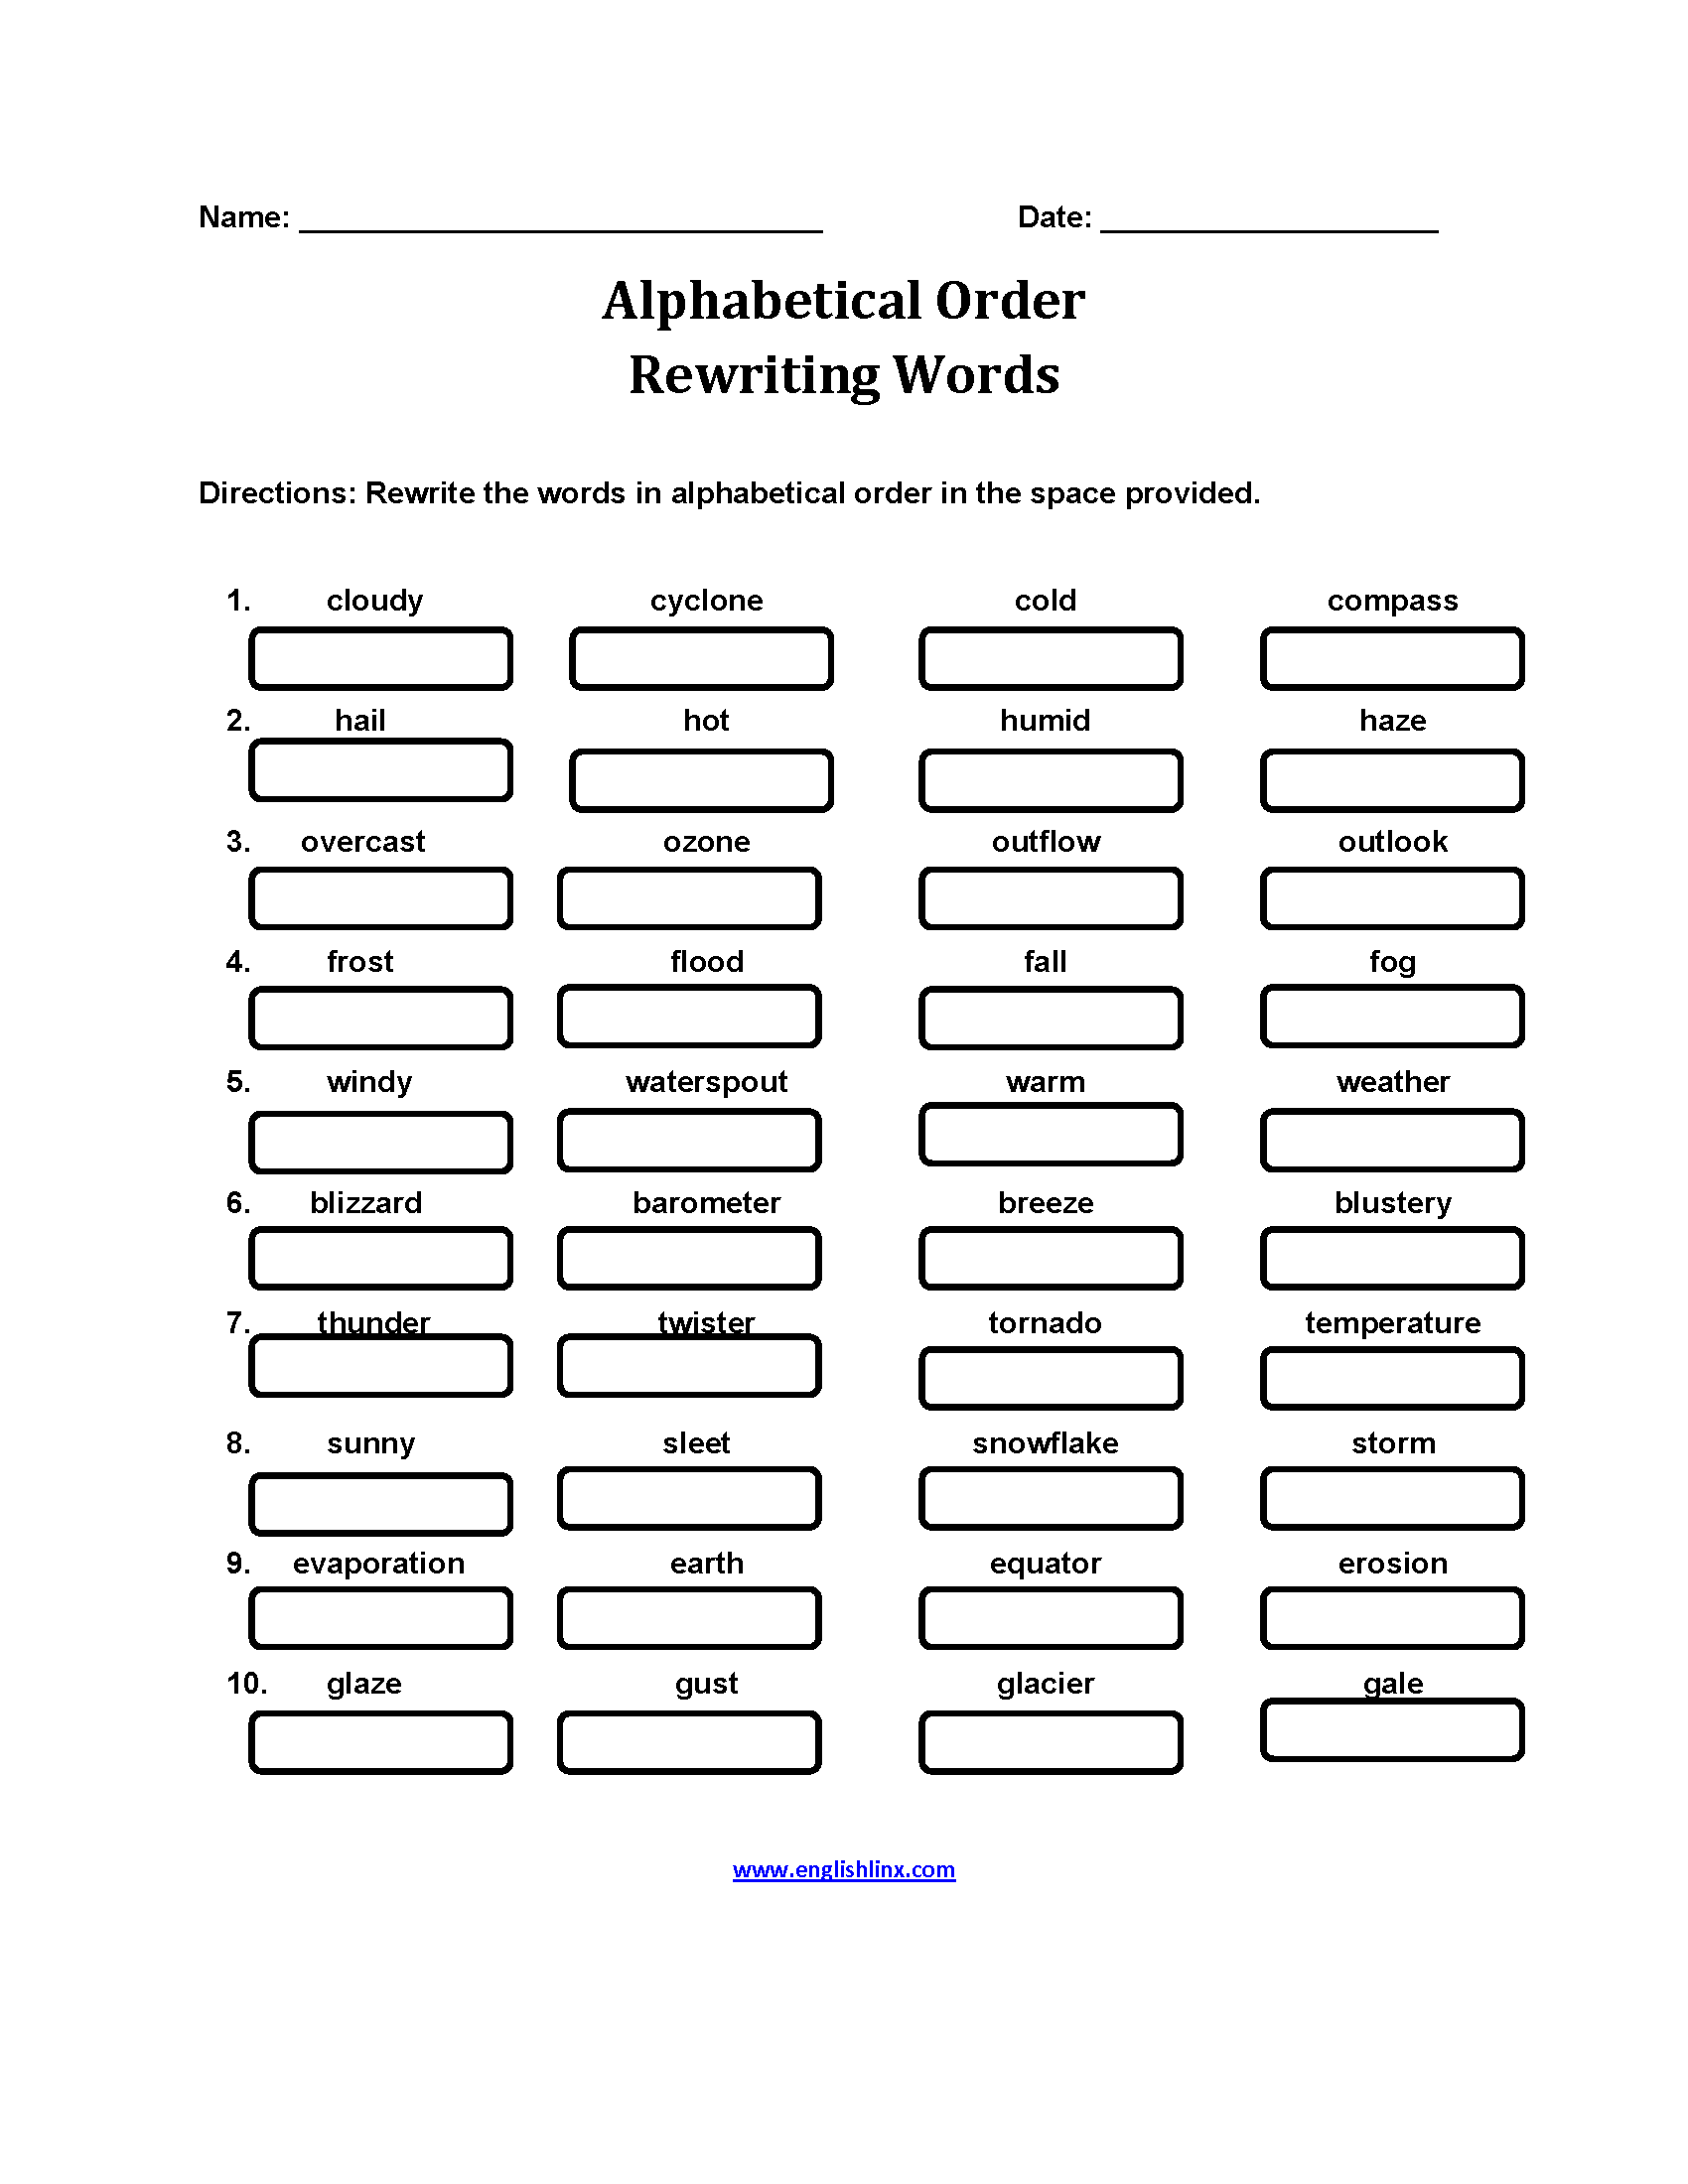 Rewriting Words Alphabetical Order Worksheets